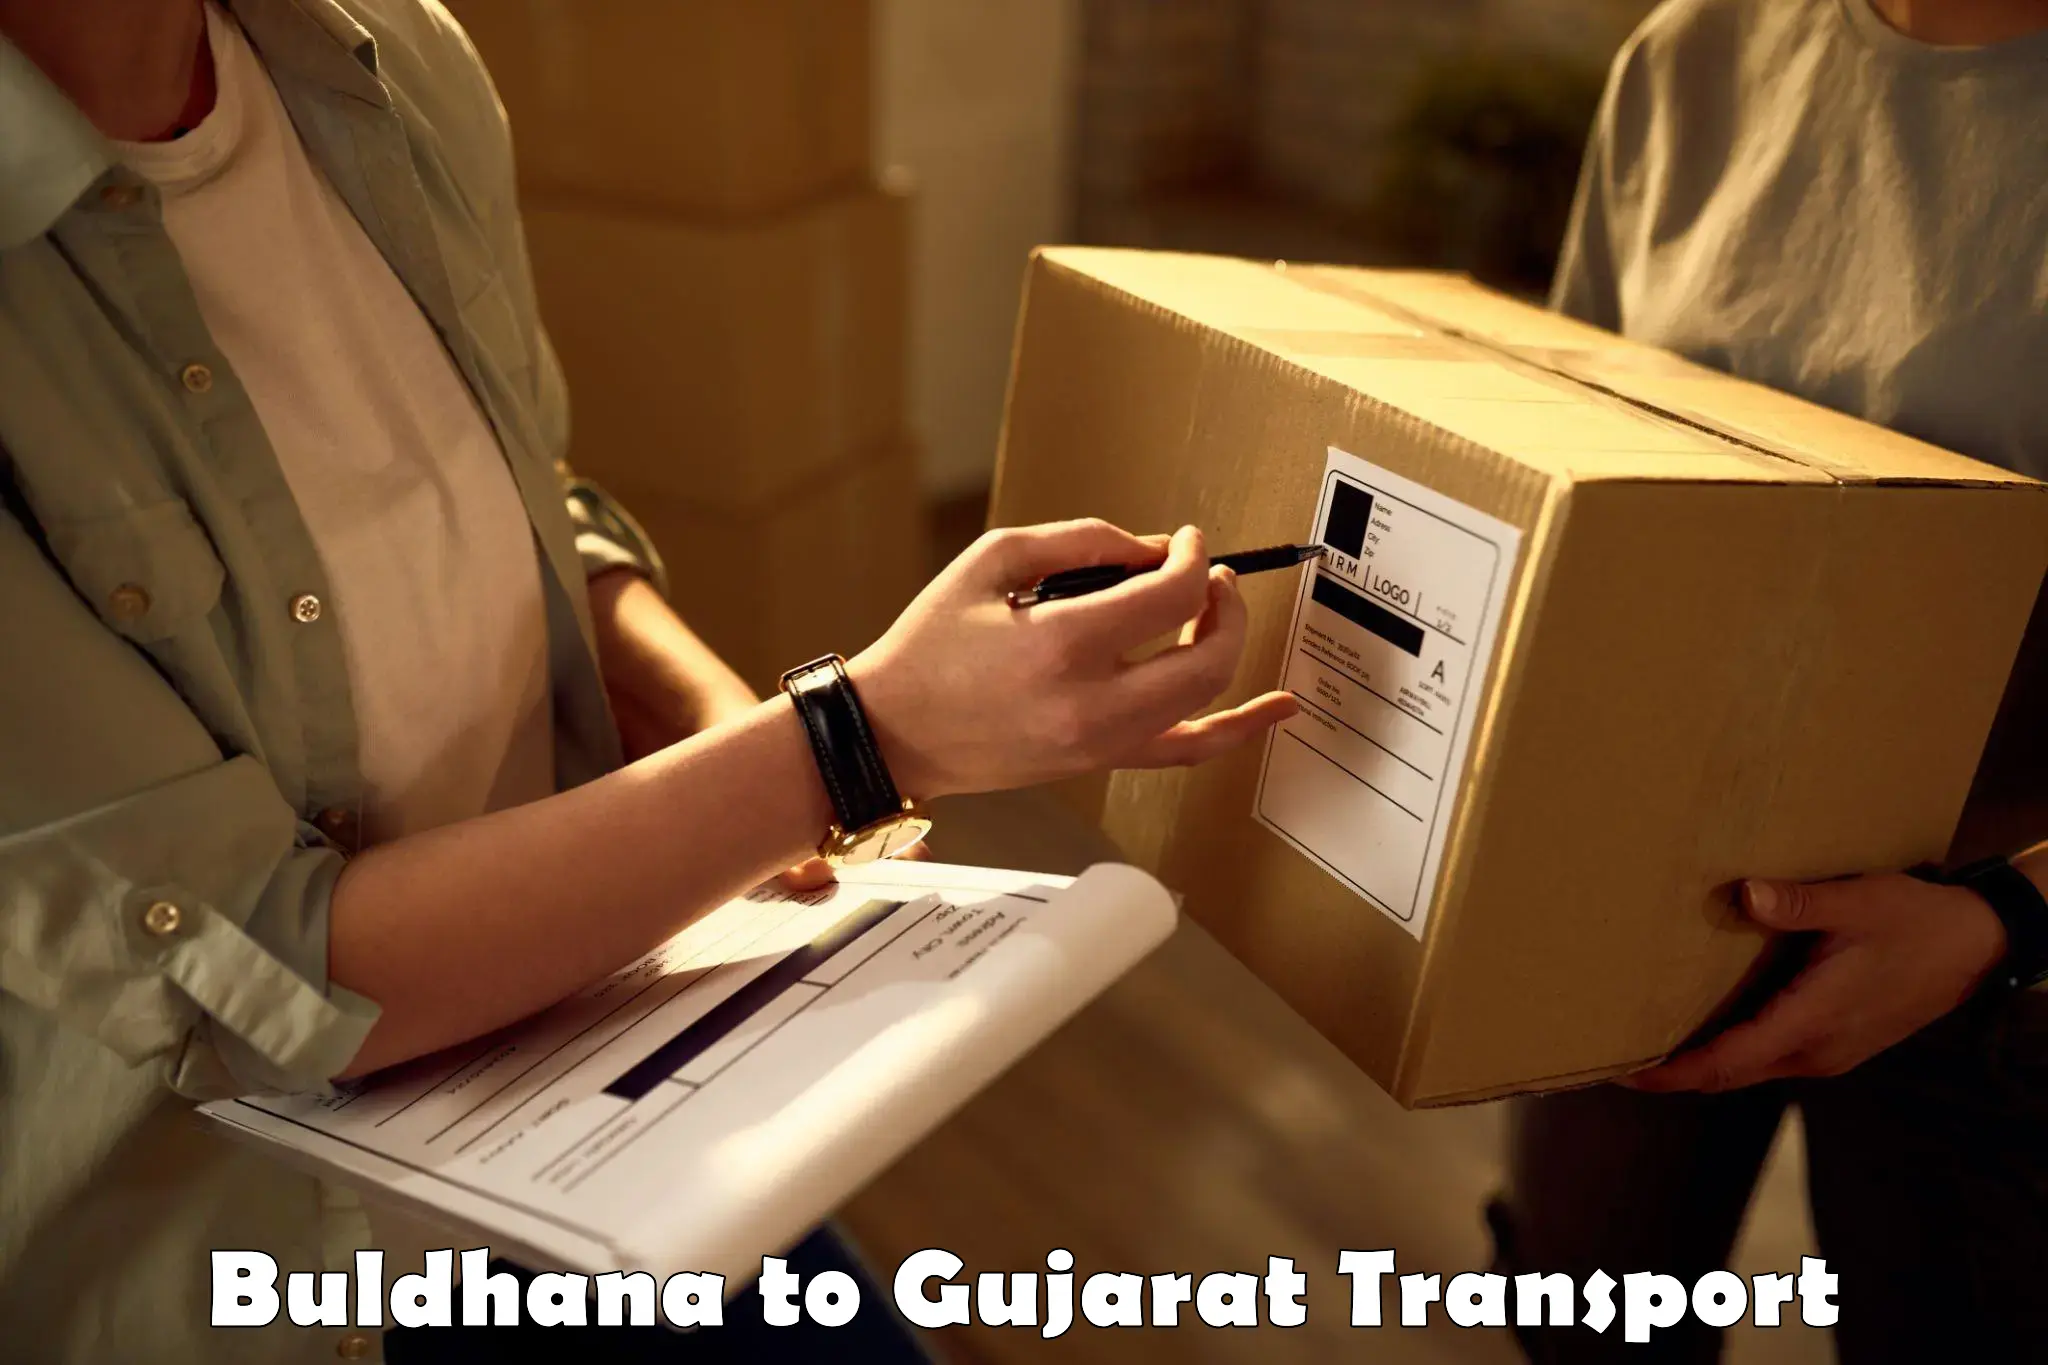 Daily transport service Buldhana to Gujarat